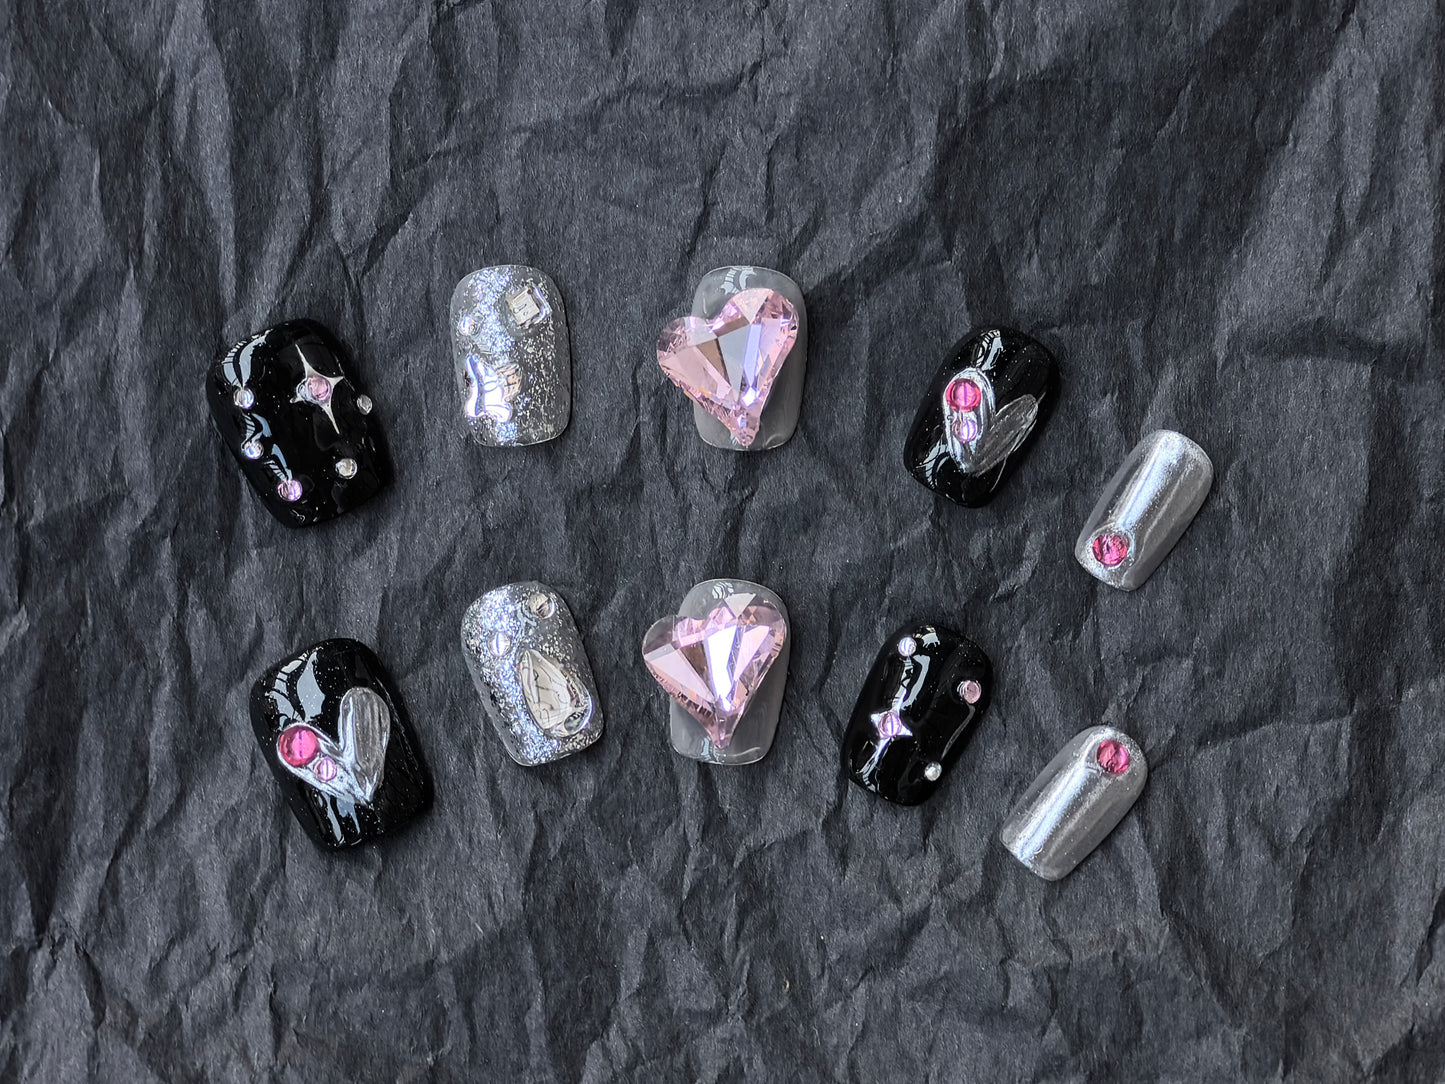 Sweet-cool style black-pink nail art